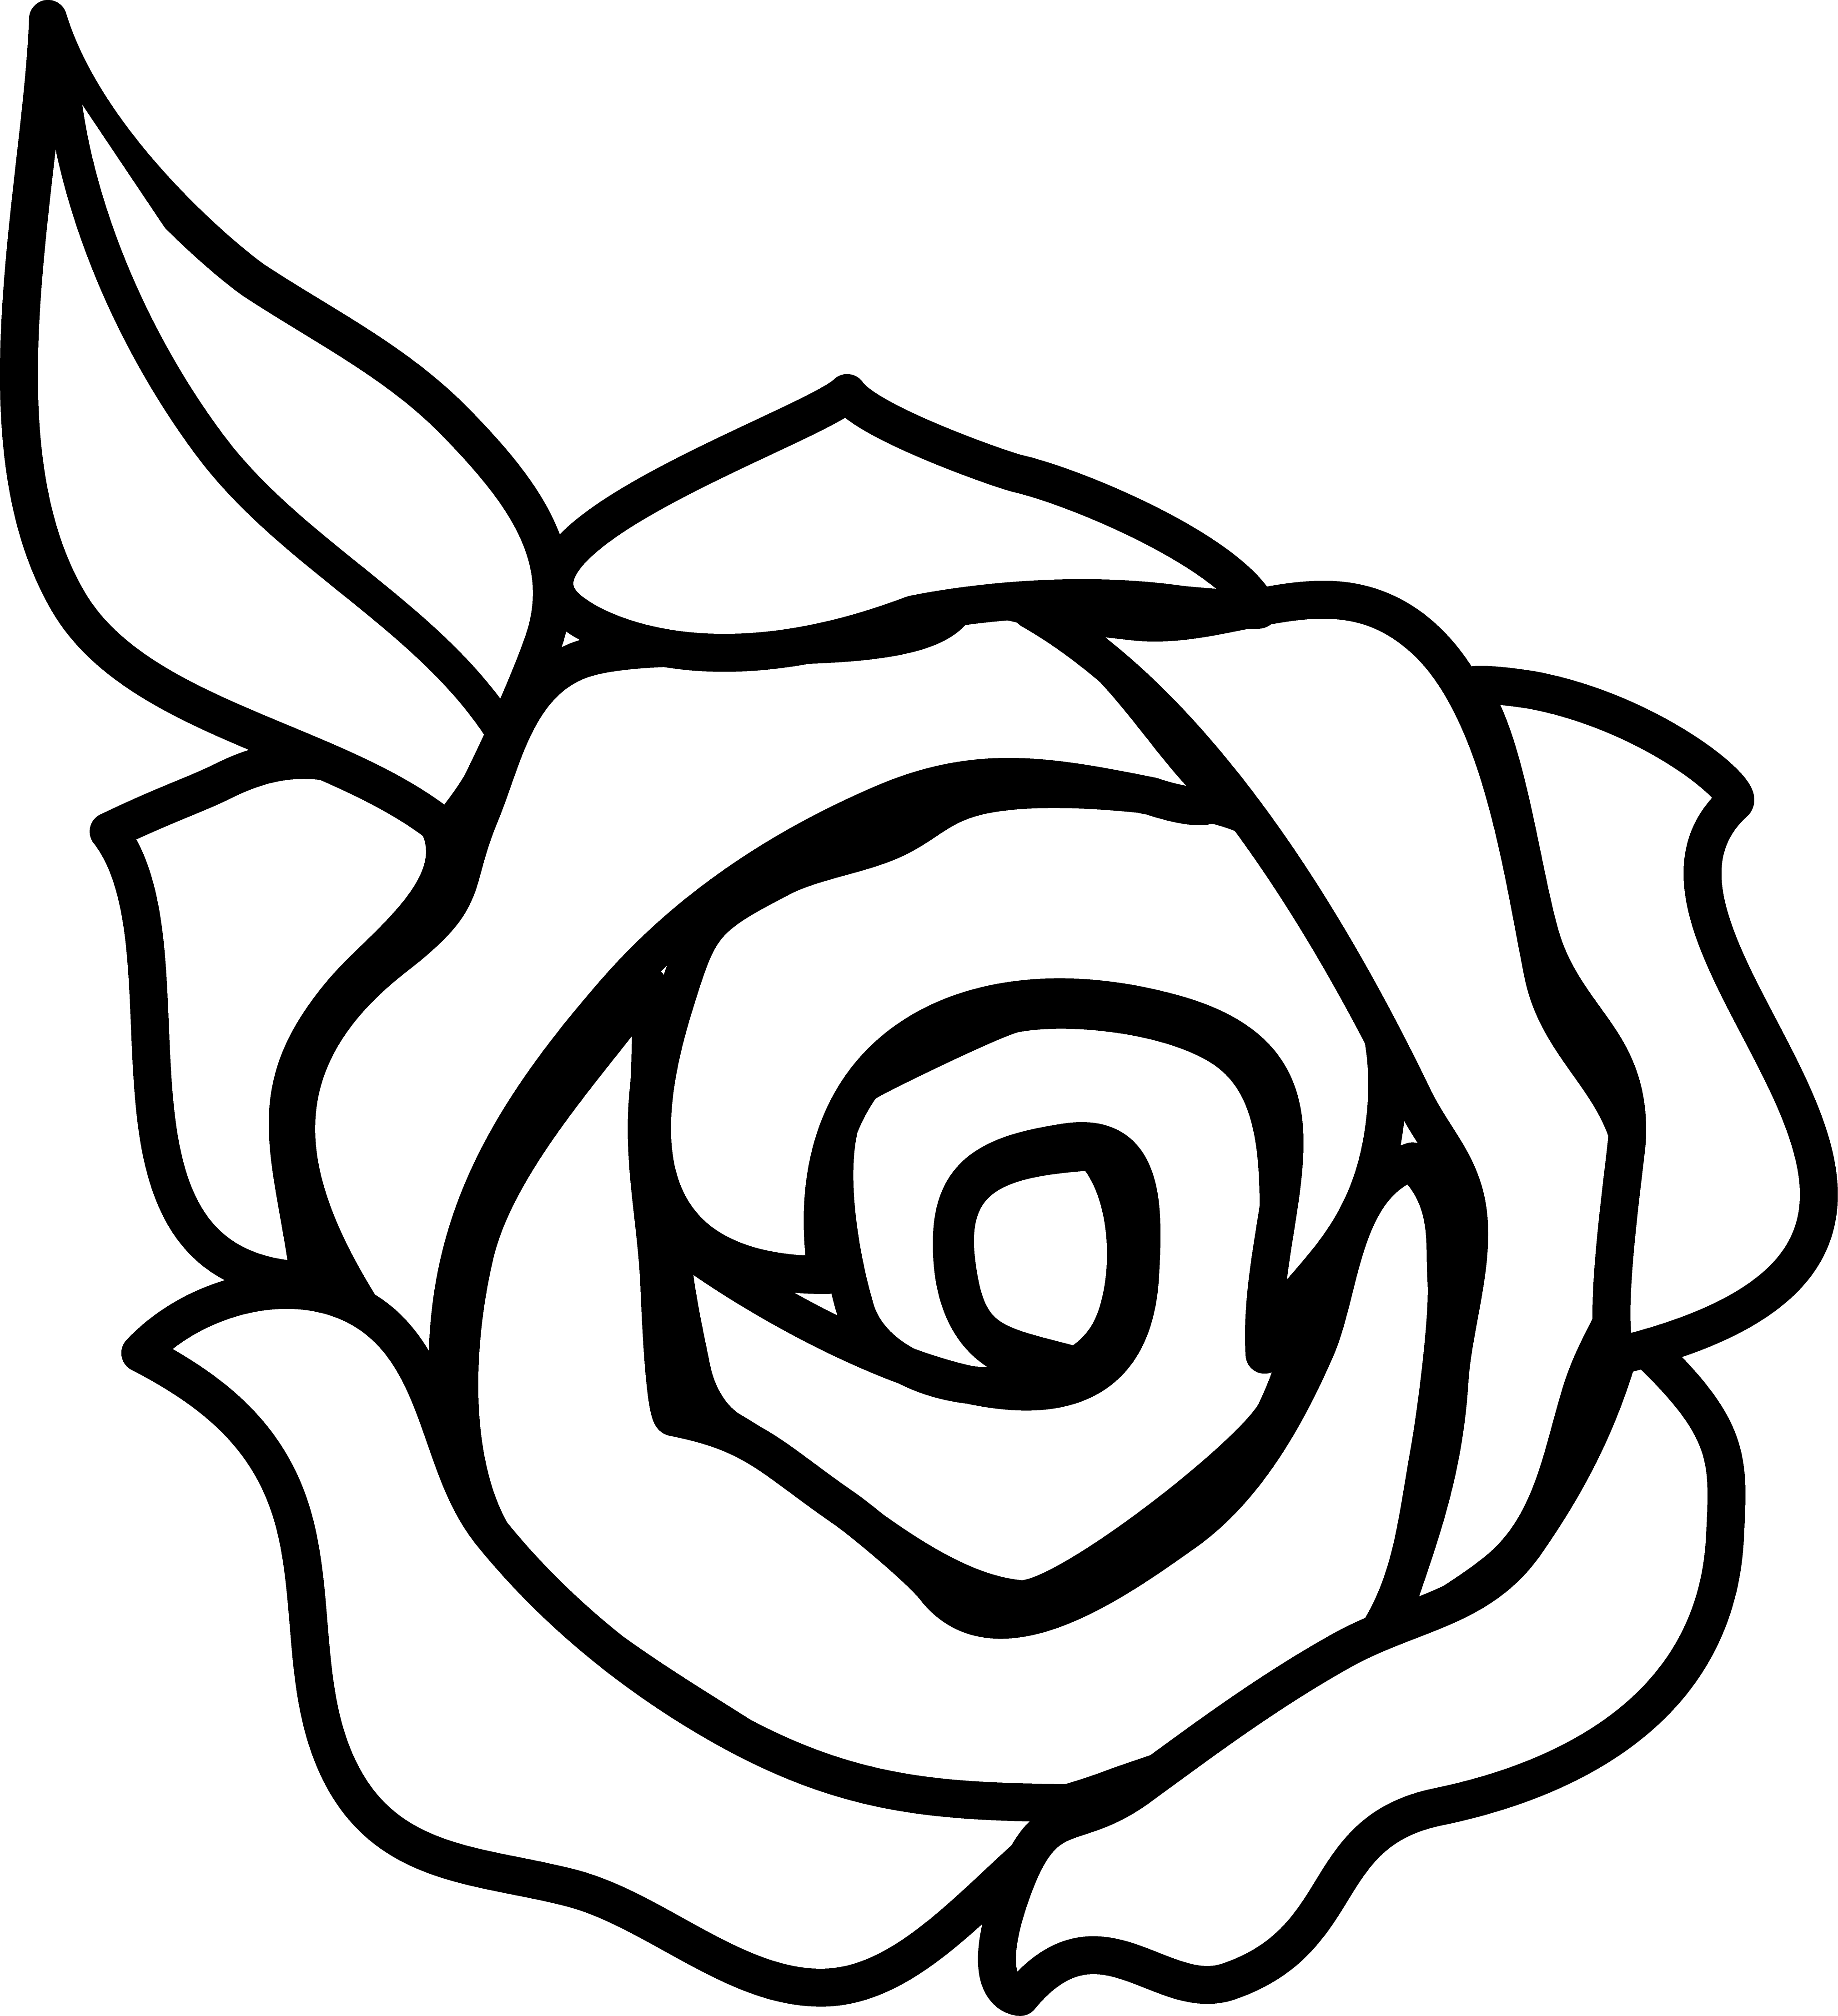 Black And White Rose Border Clip Art | Clipart Panda ... - Simple Black and White Rose